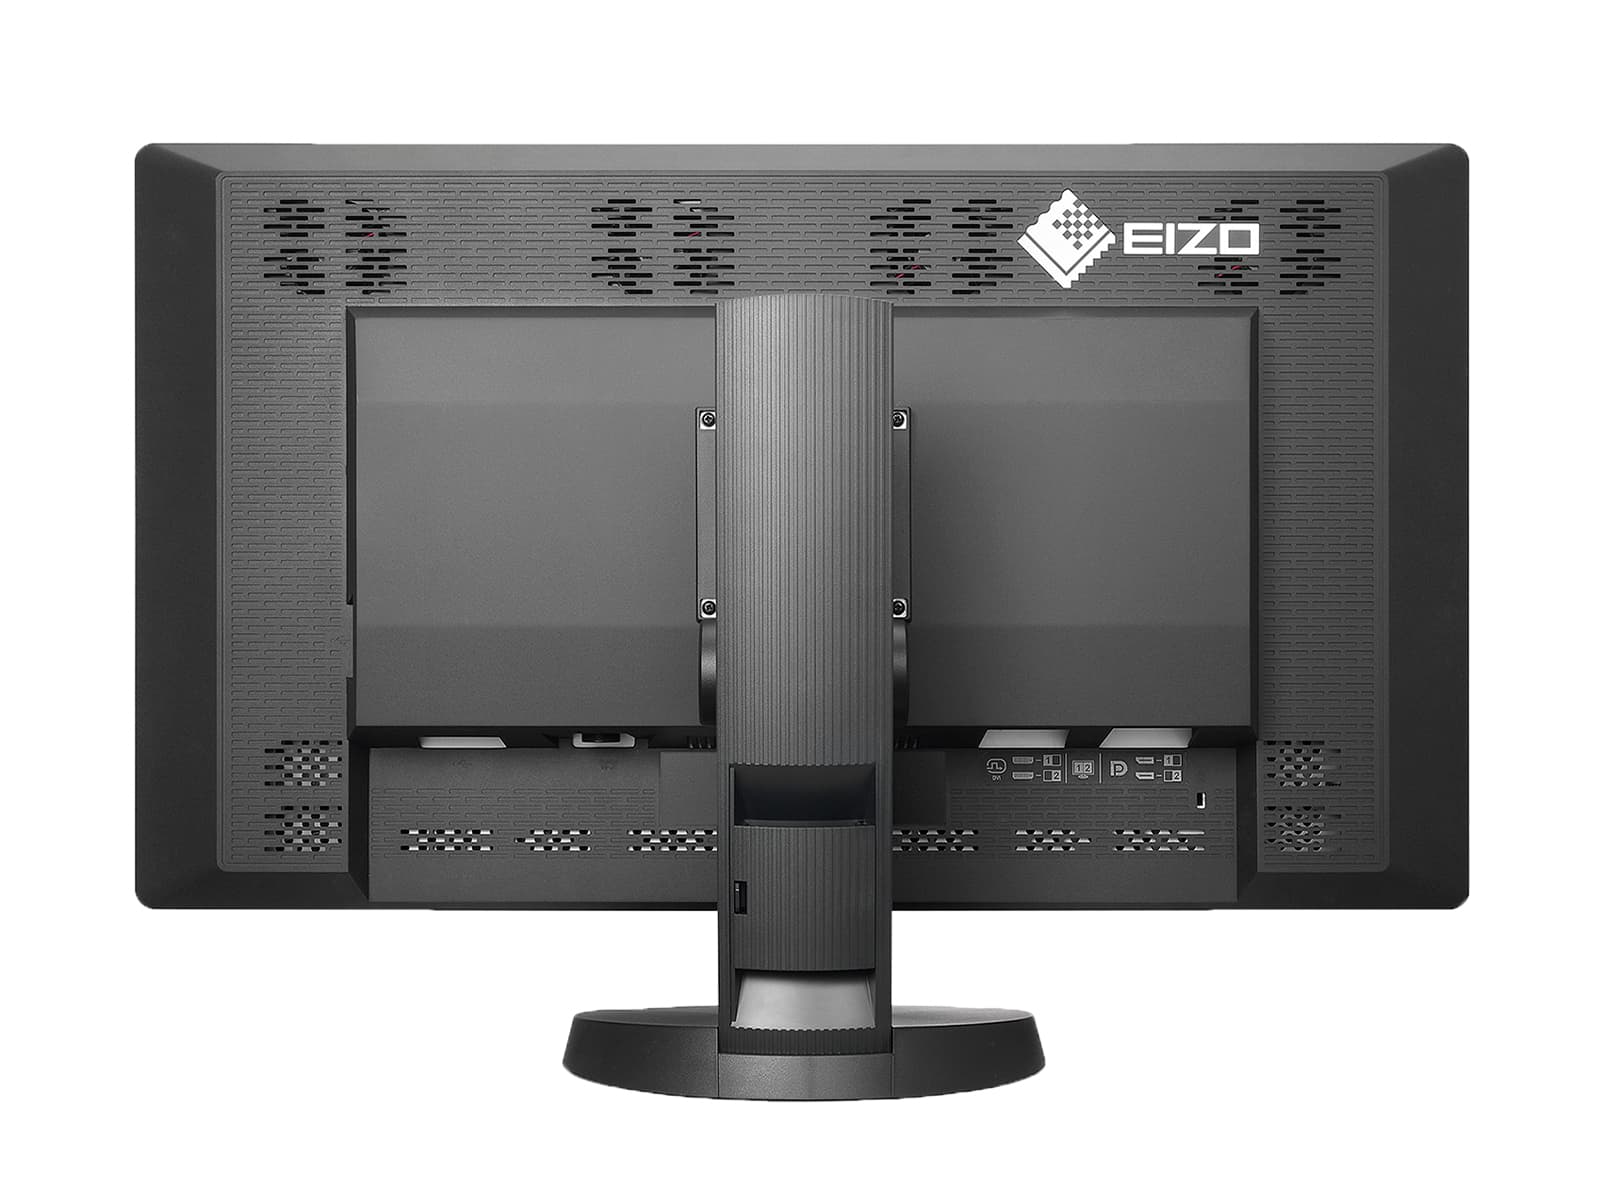 Eizo RadiForce RX850 Fusion Color LED Mammo 3D-DBT 乳房画像表示ディスプレイ (RX850-BK) Monitors.com